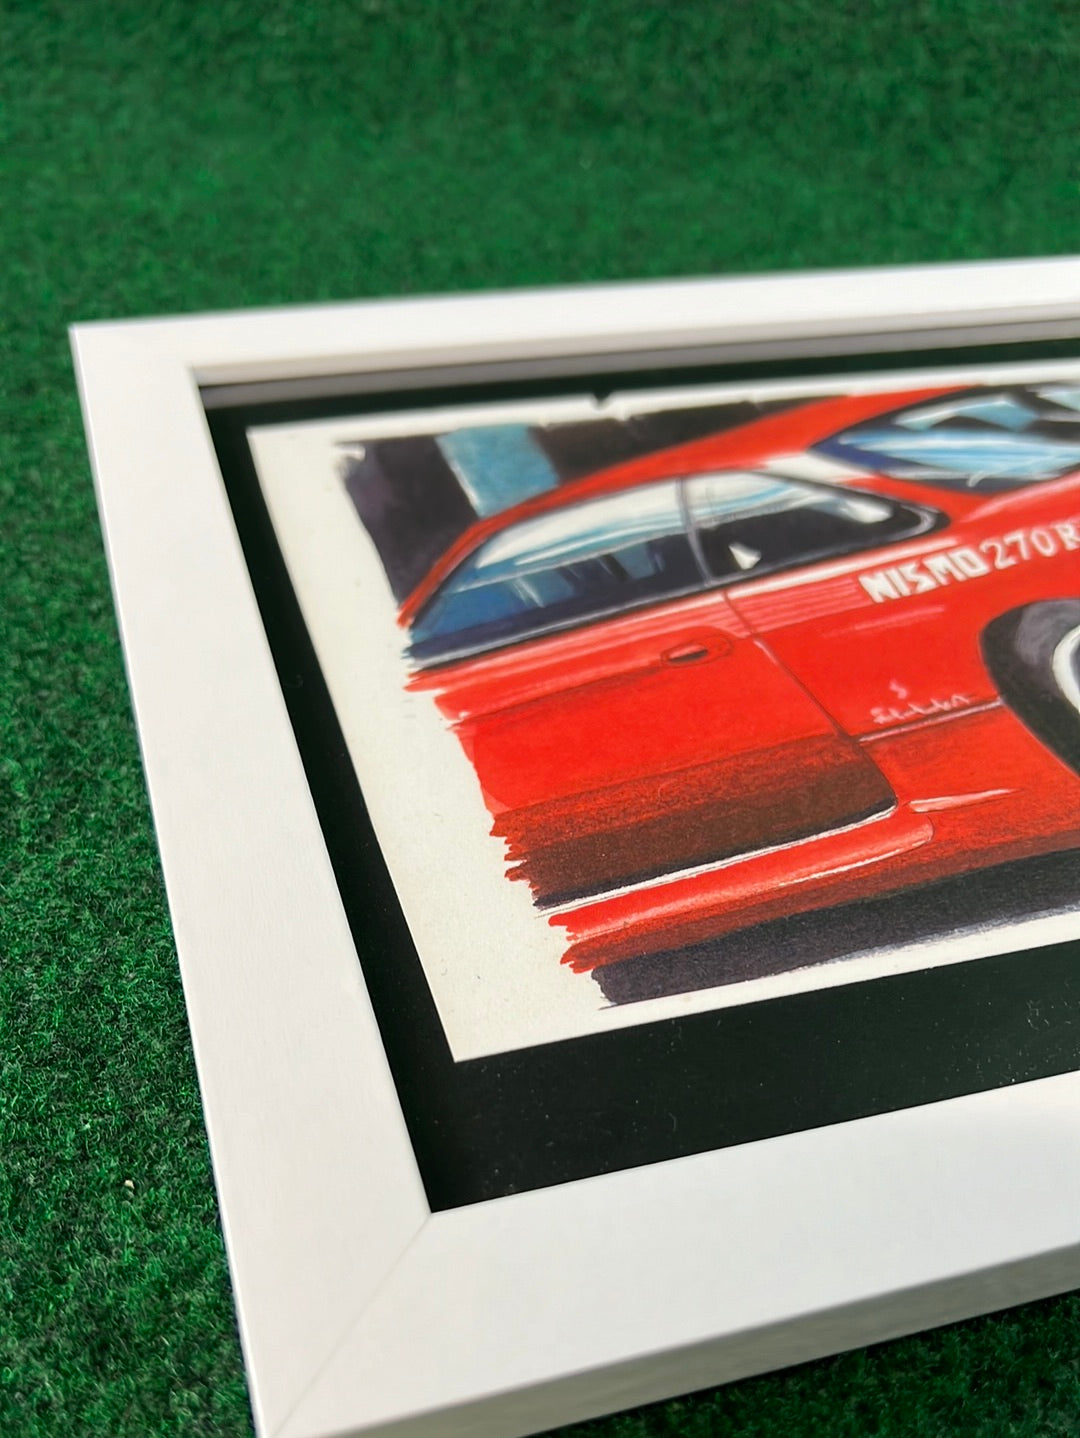 Red Nissan Silvia 270R S14 Framed Print